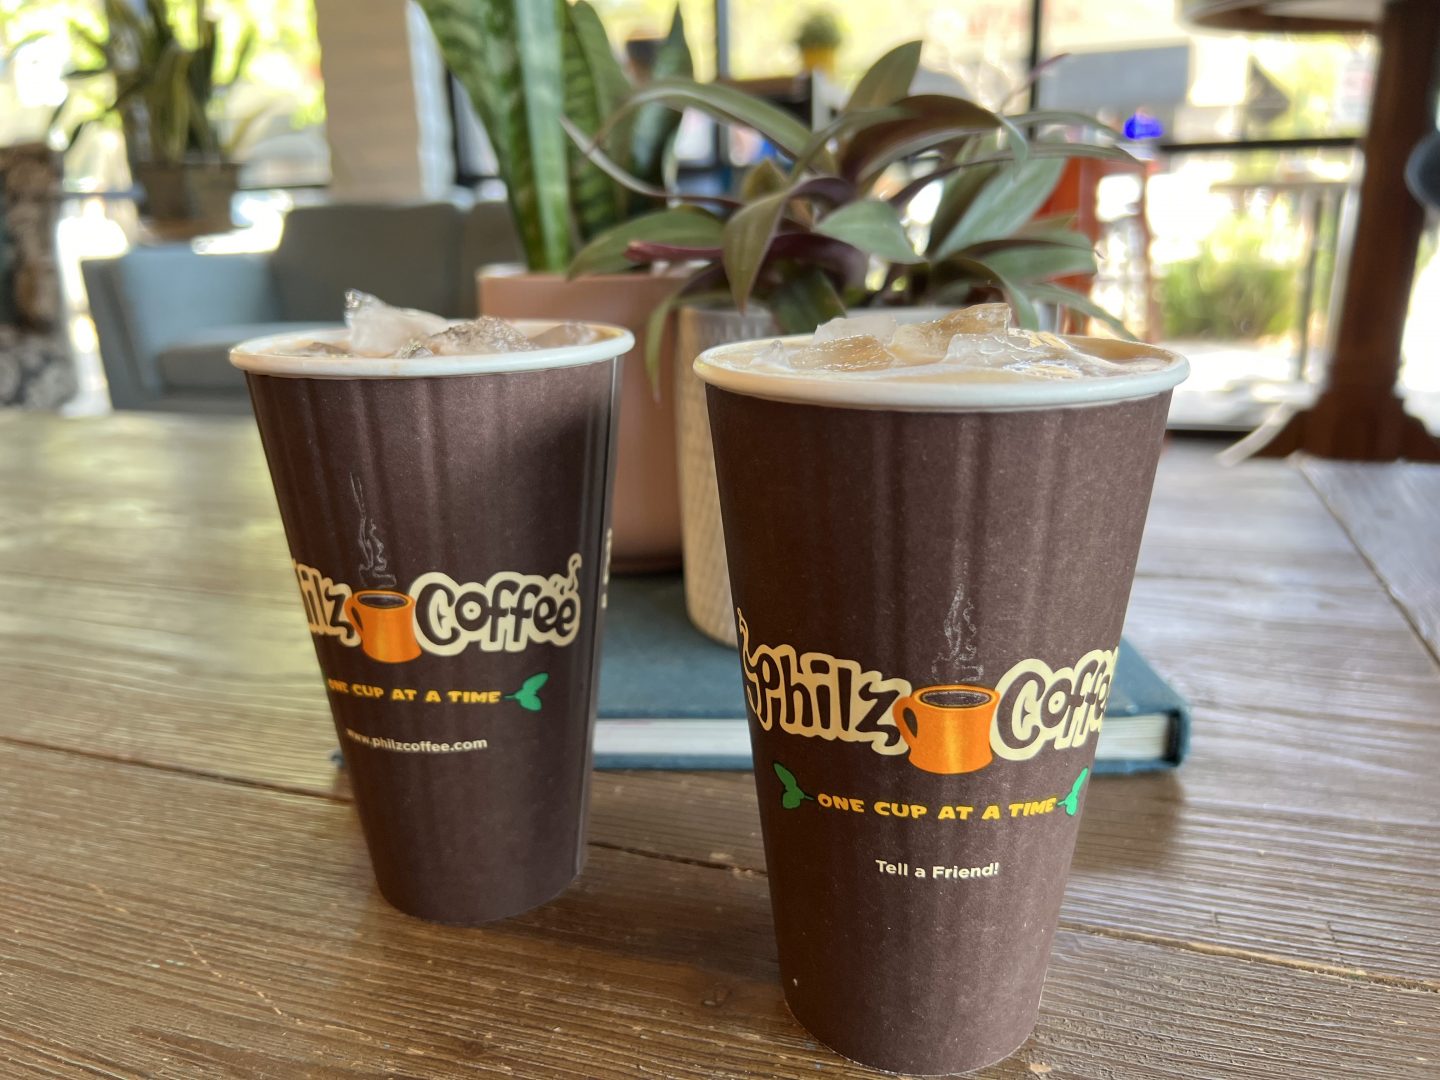 philz coffee drinks